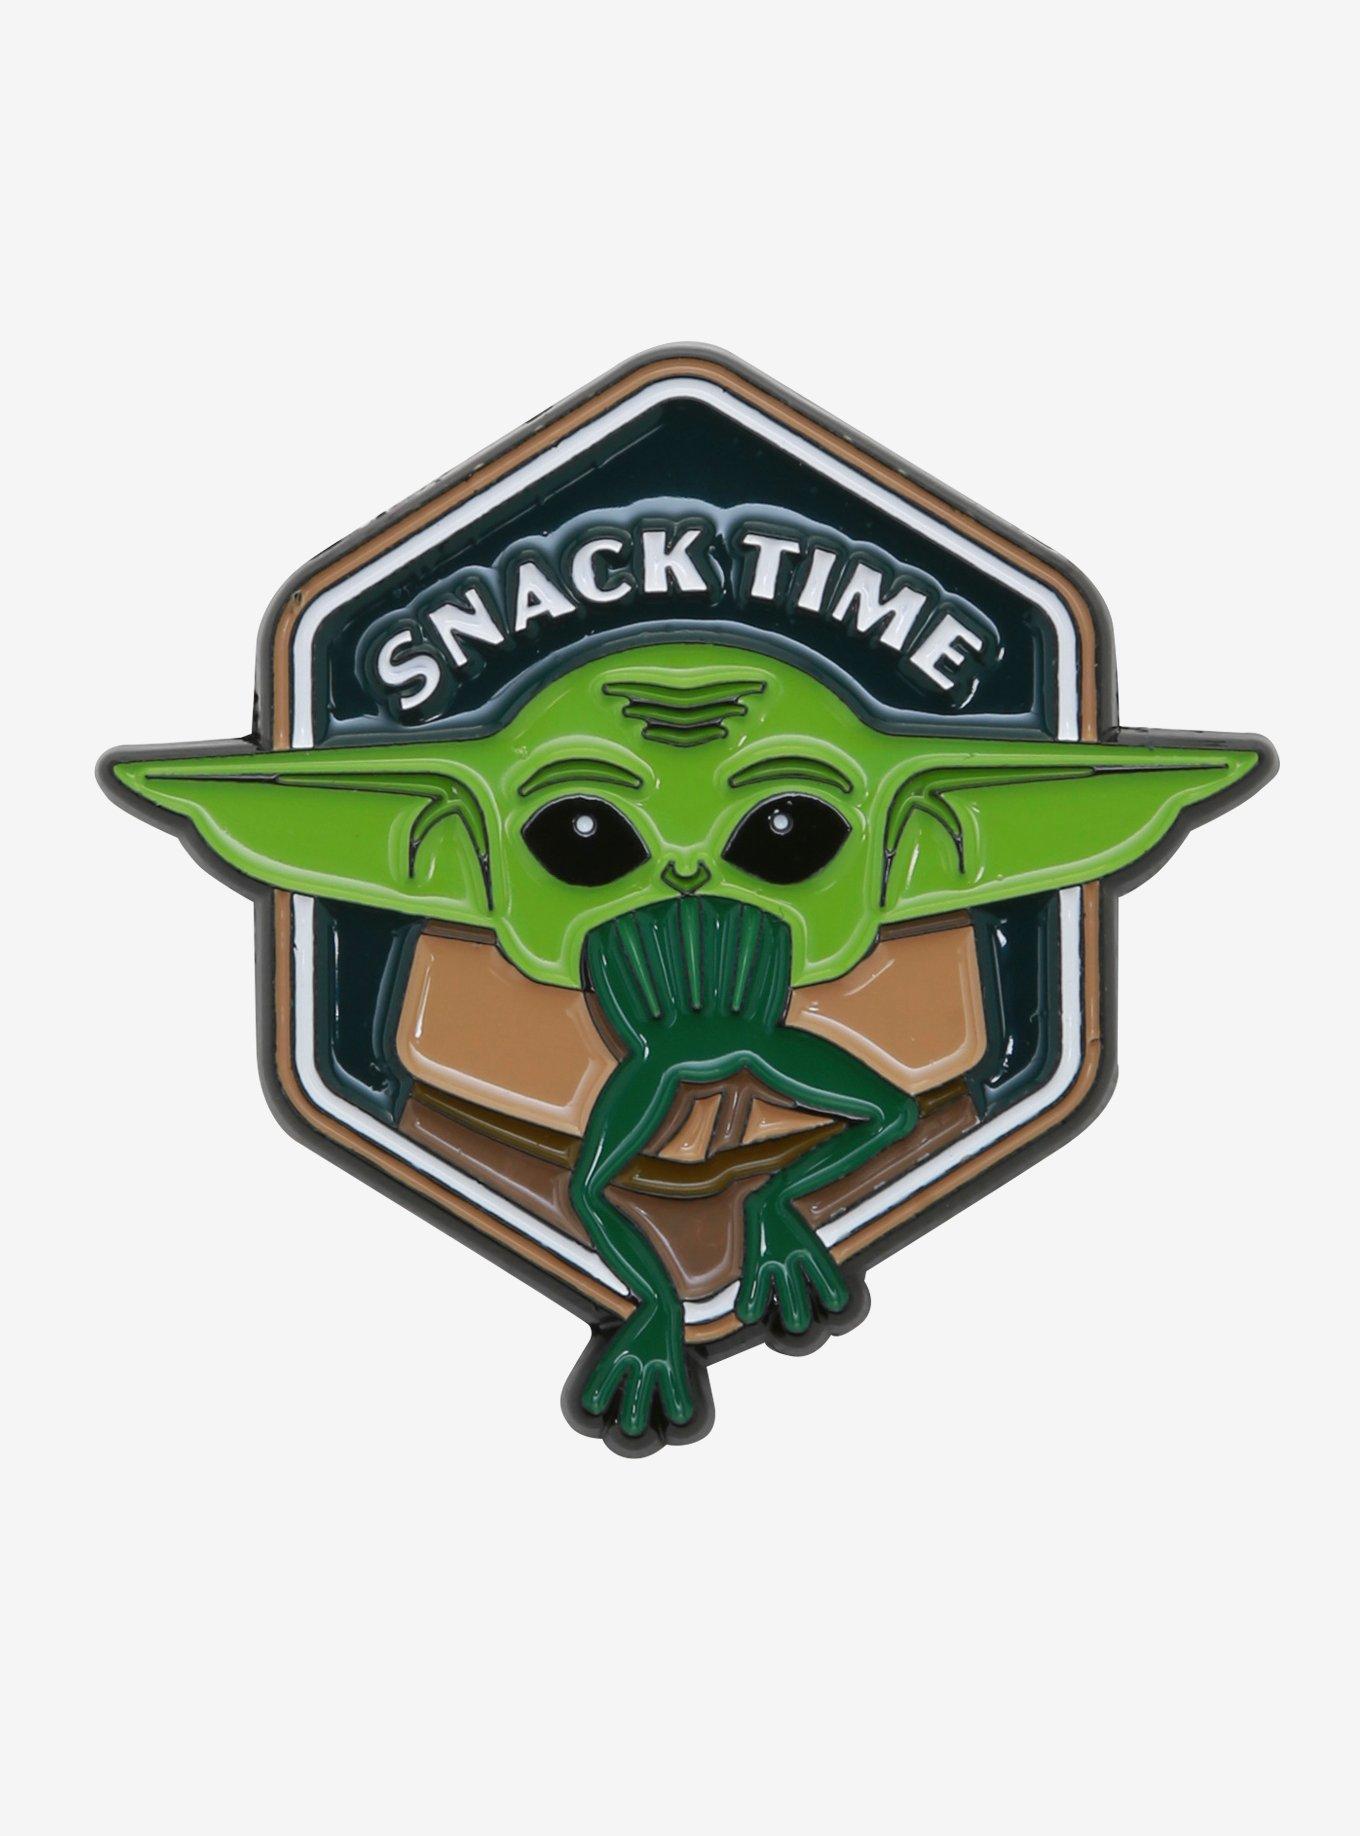 Star Wars The Mandalorian Snack Time Enamel Pin, , hi-res